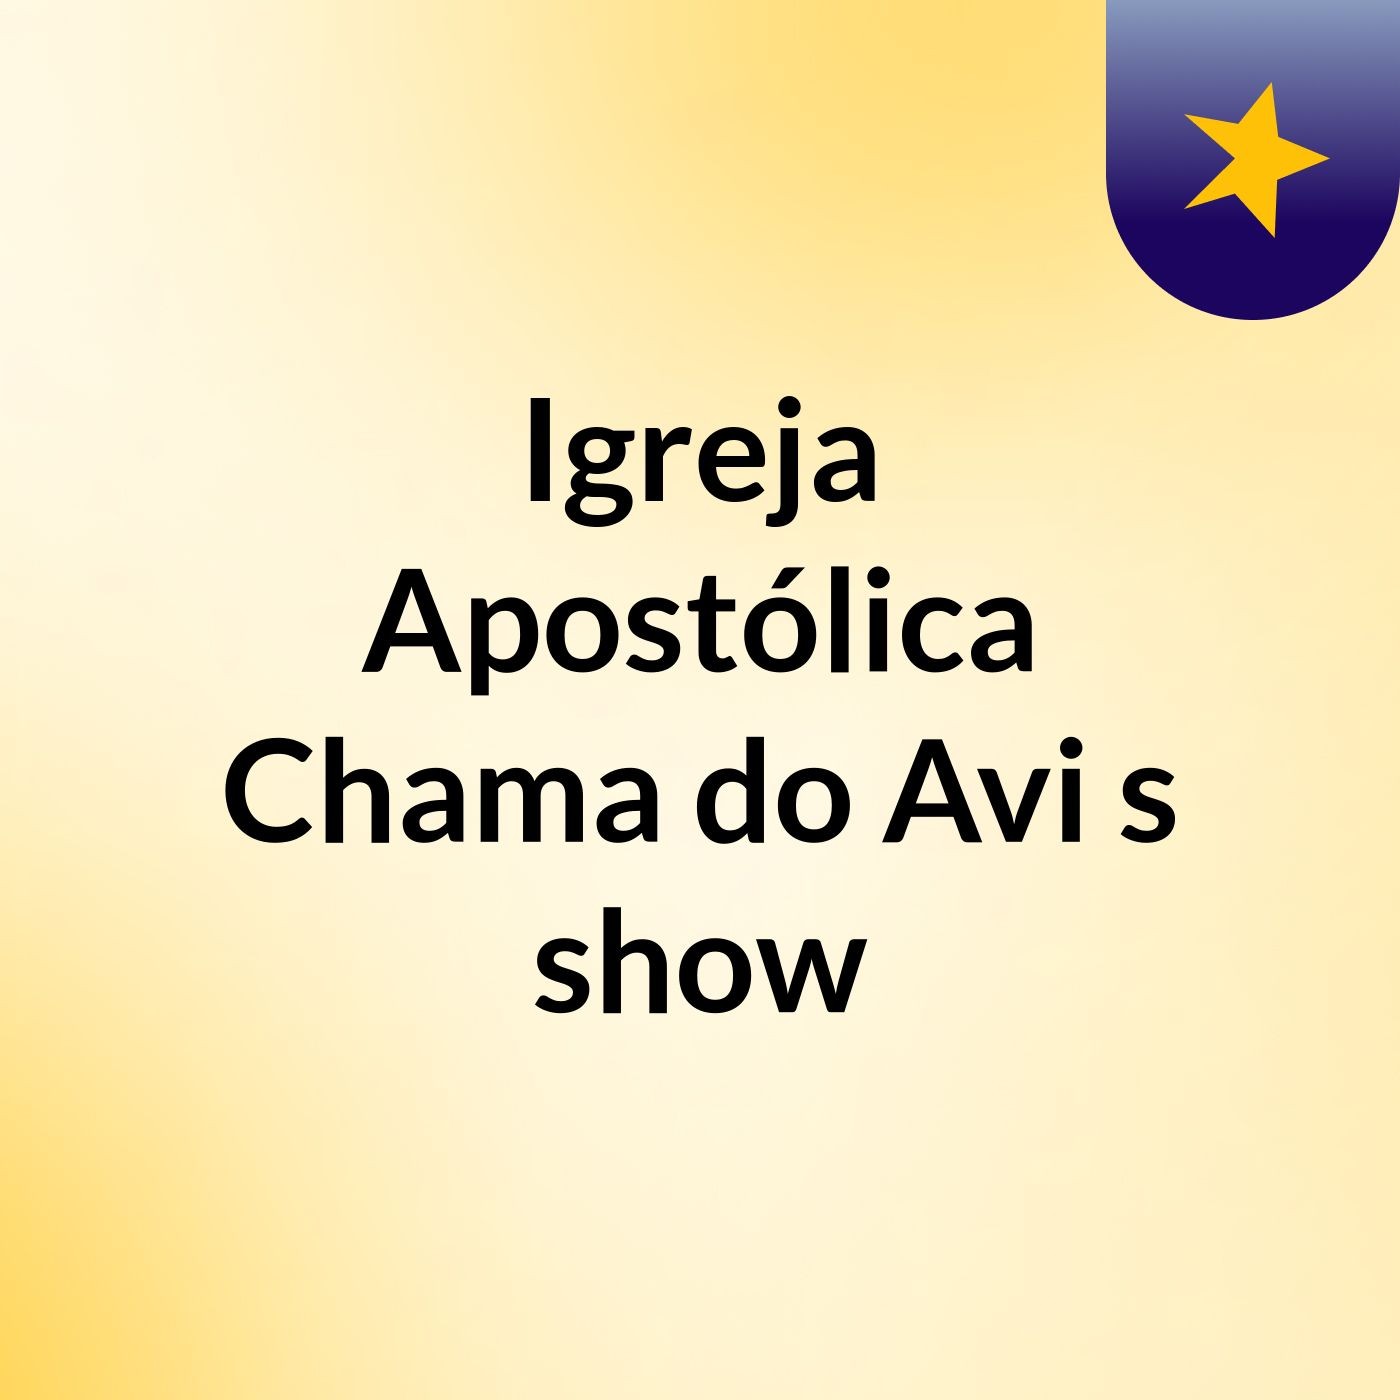 Episódio 4 - Igreja Apostólica Chama do Avi's show